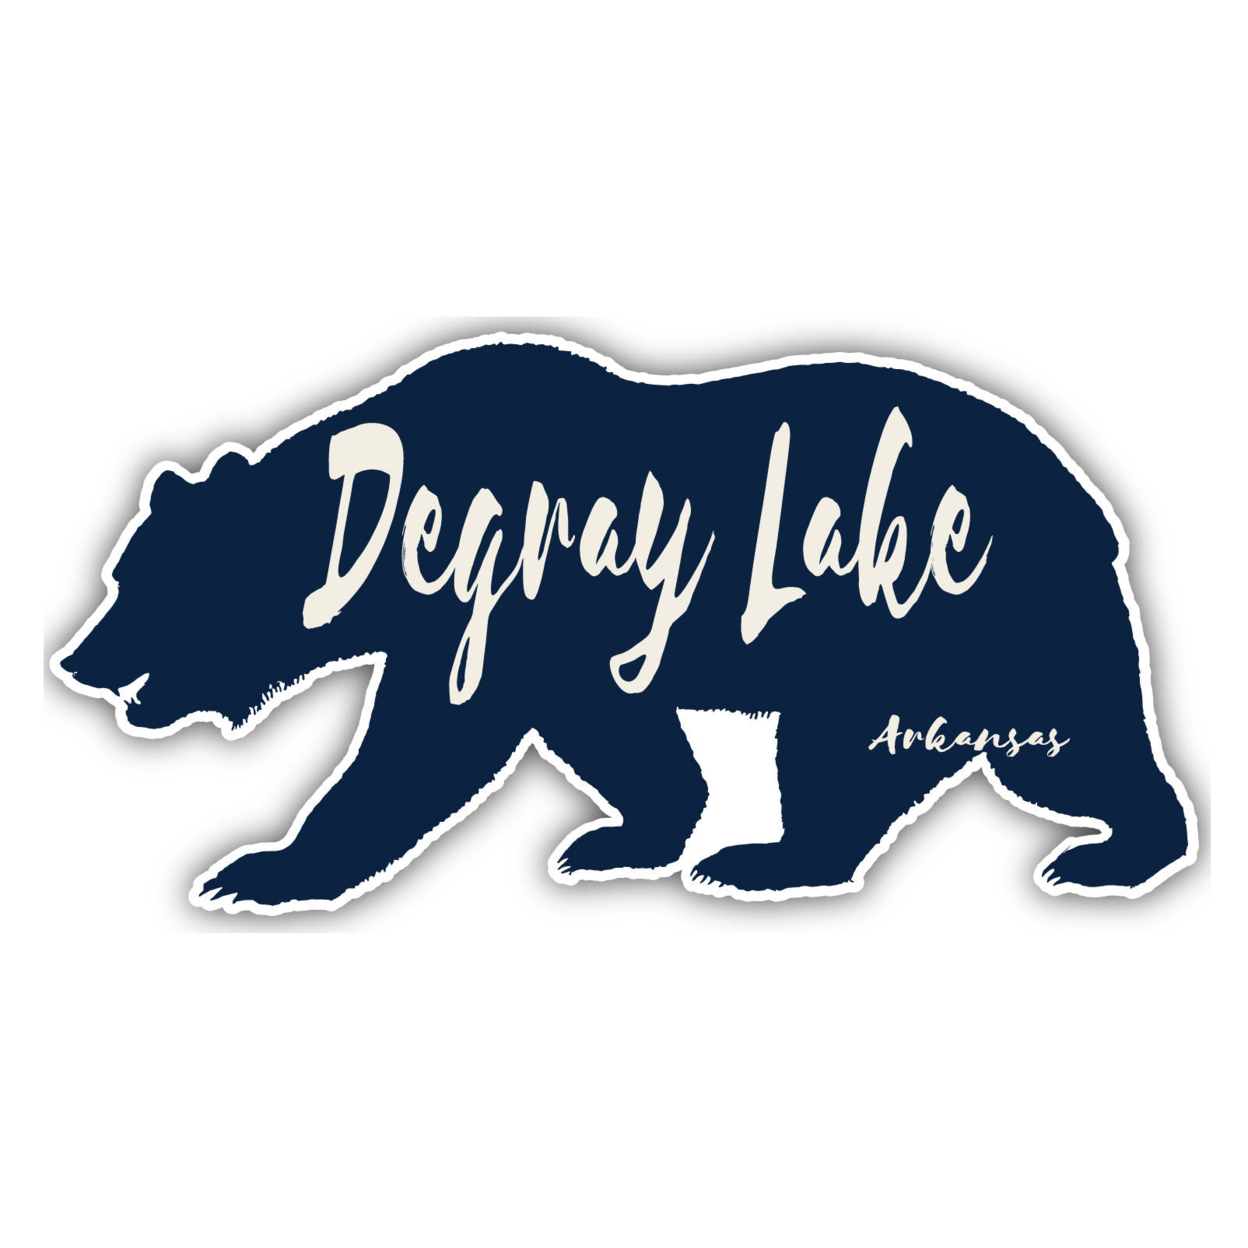 DeGray Lake Arkansas Souvenir Decorative Stickers (Choose Theme And Size) - Single Unit, 8-Inch, Tent